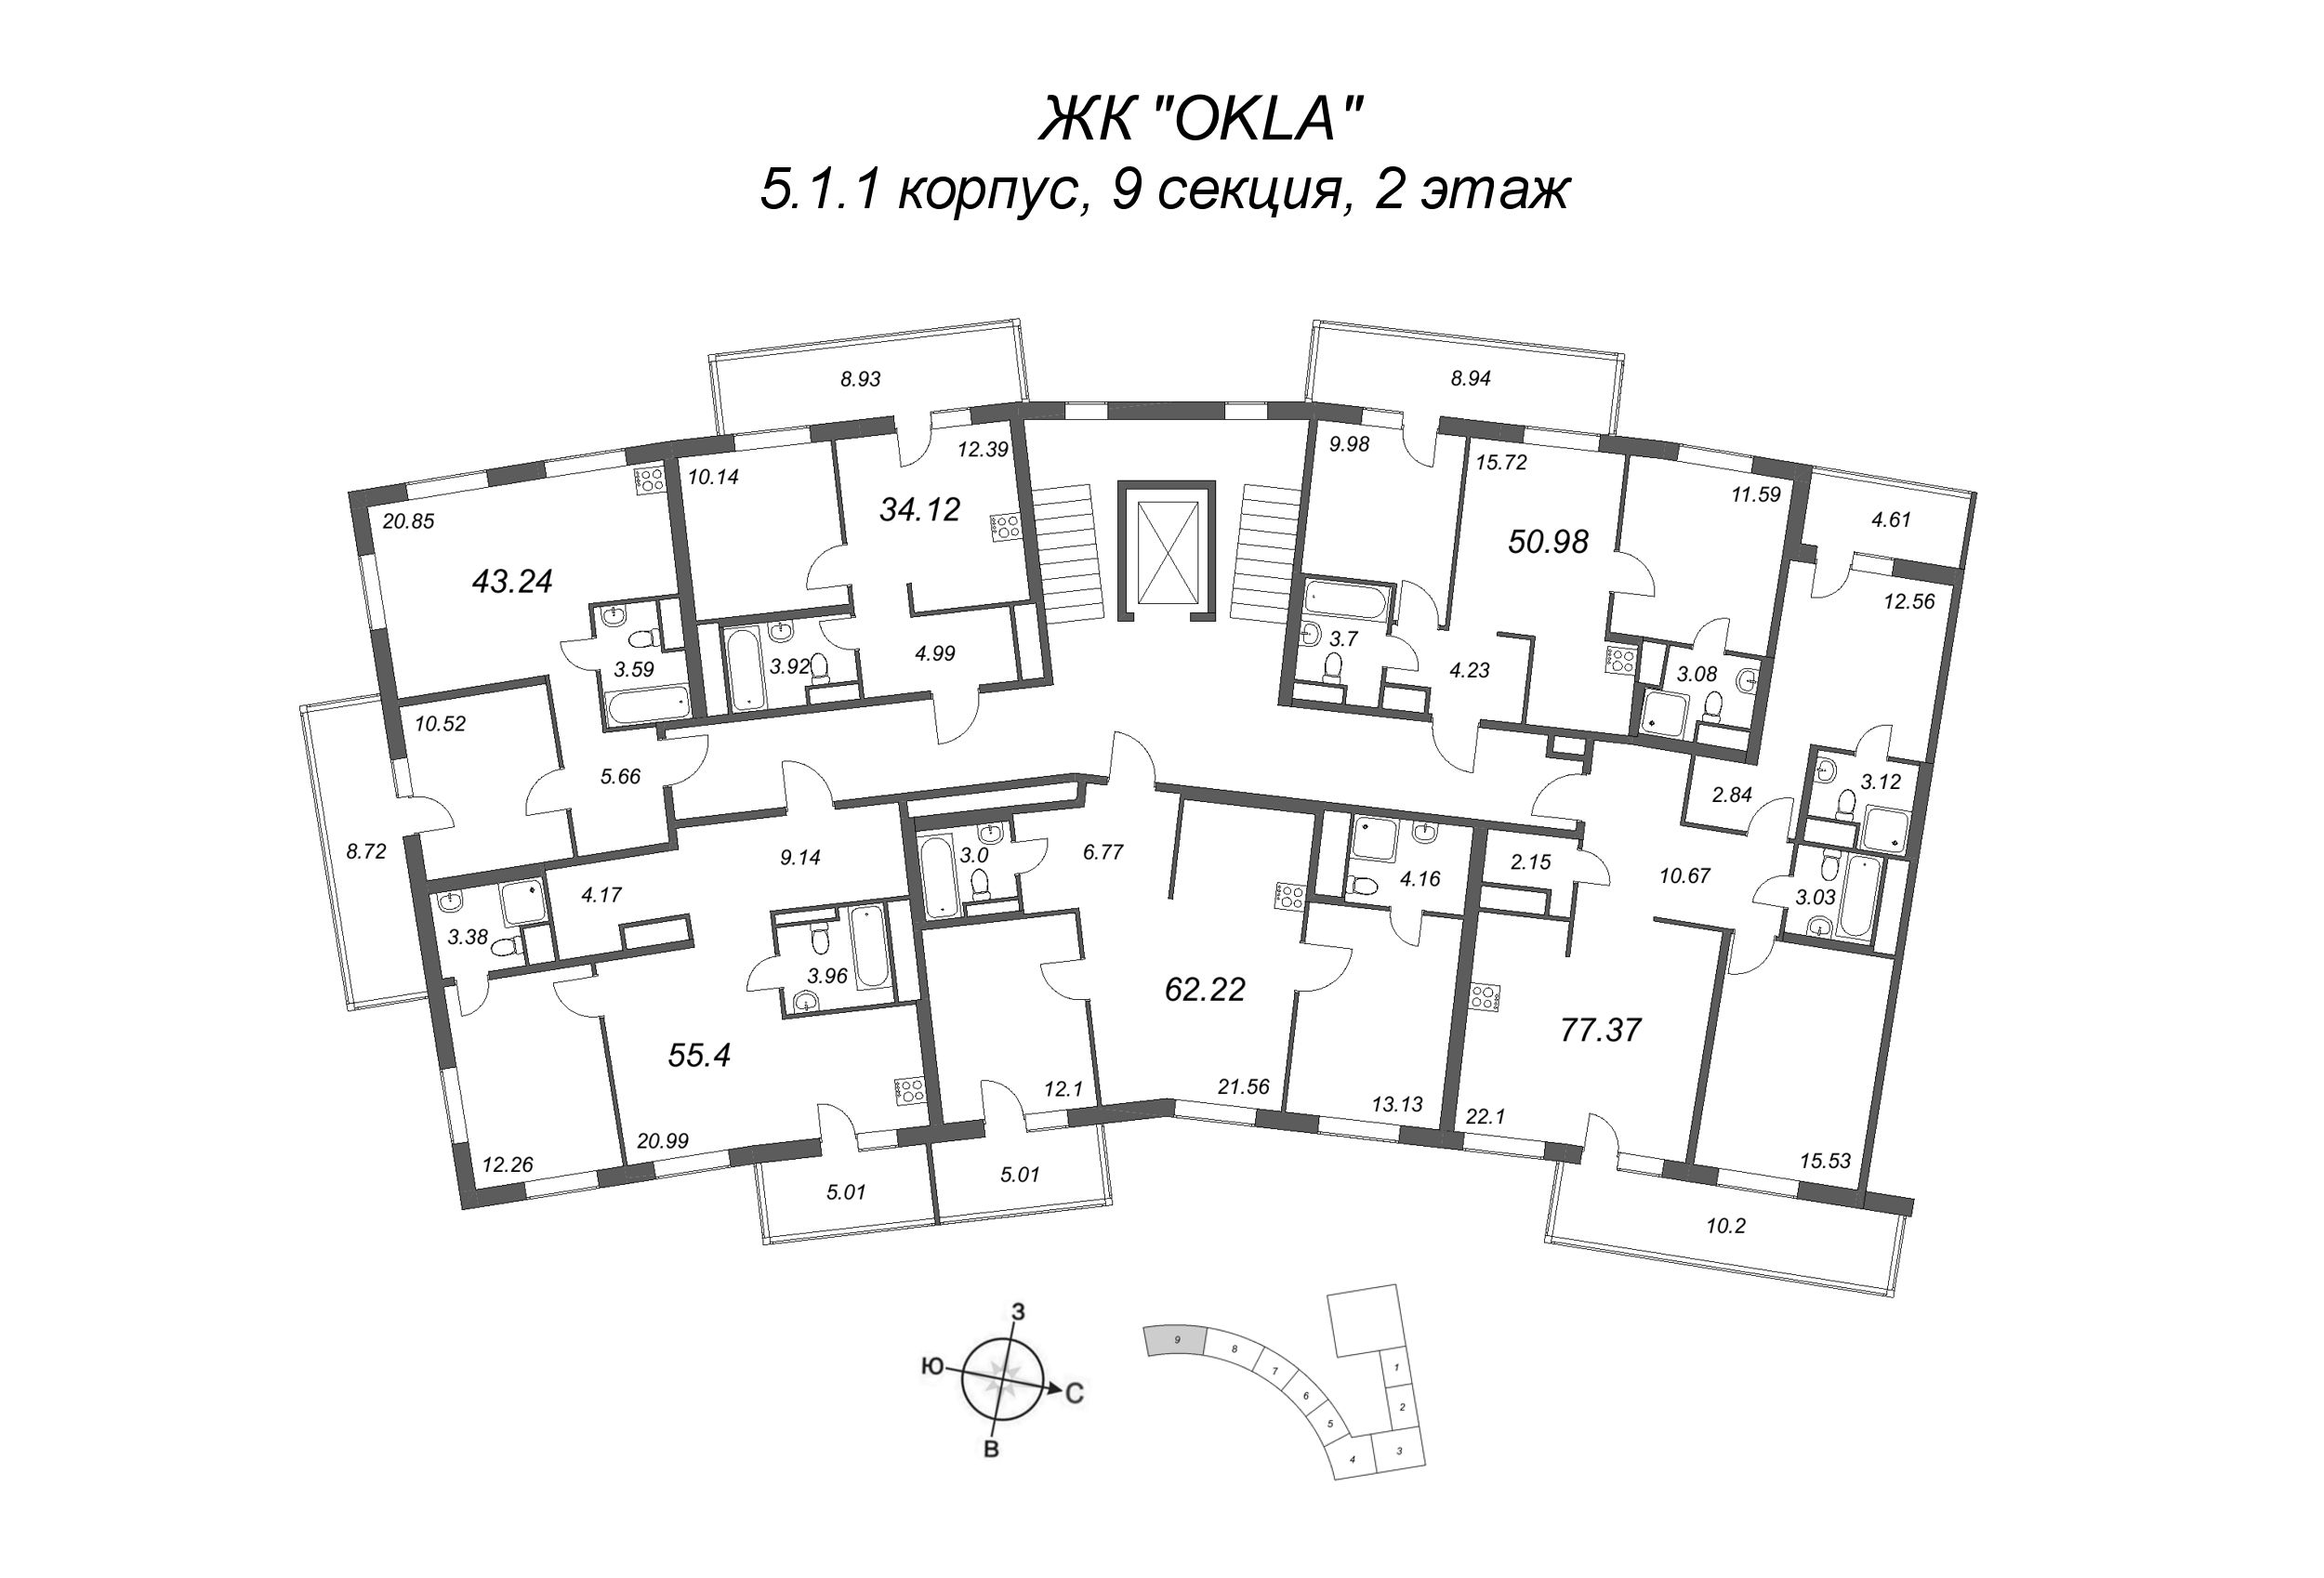 2-комнатная (Евро) квартира, 58.9 м² - планировка этажа